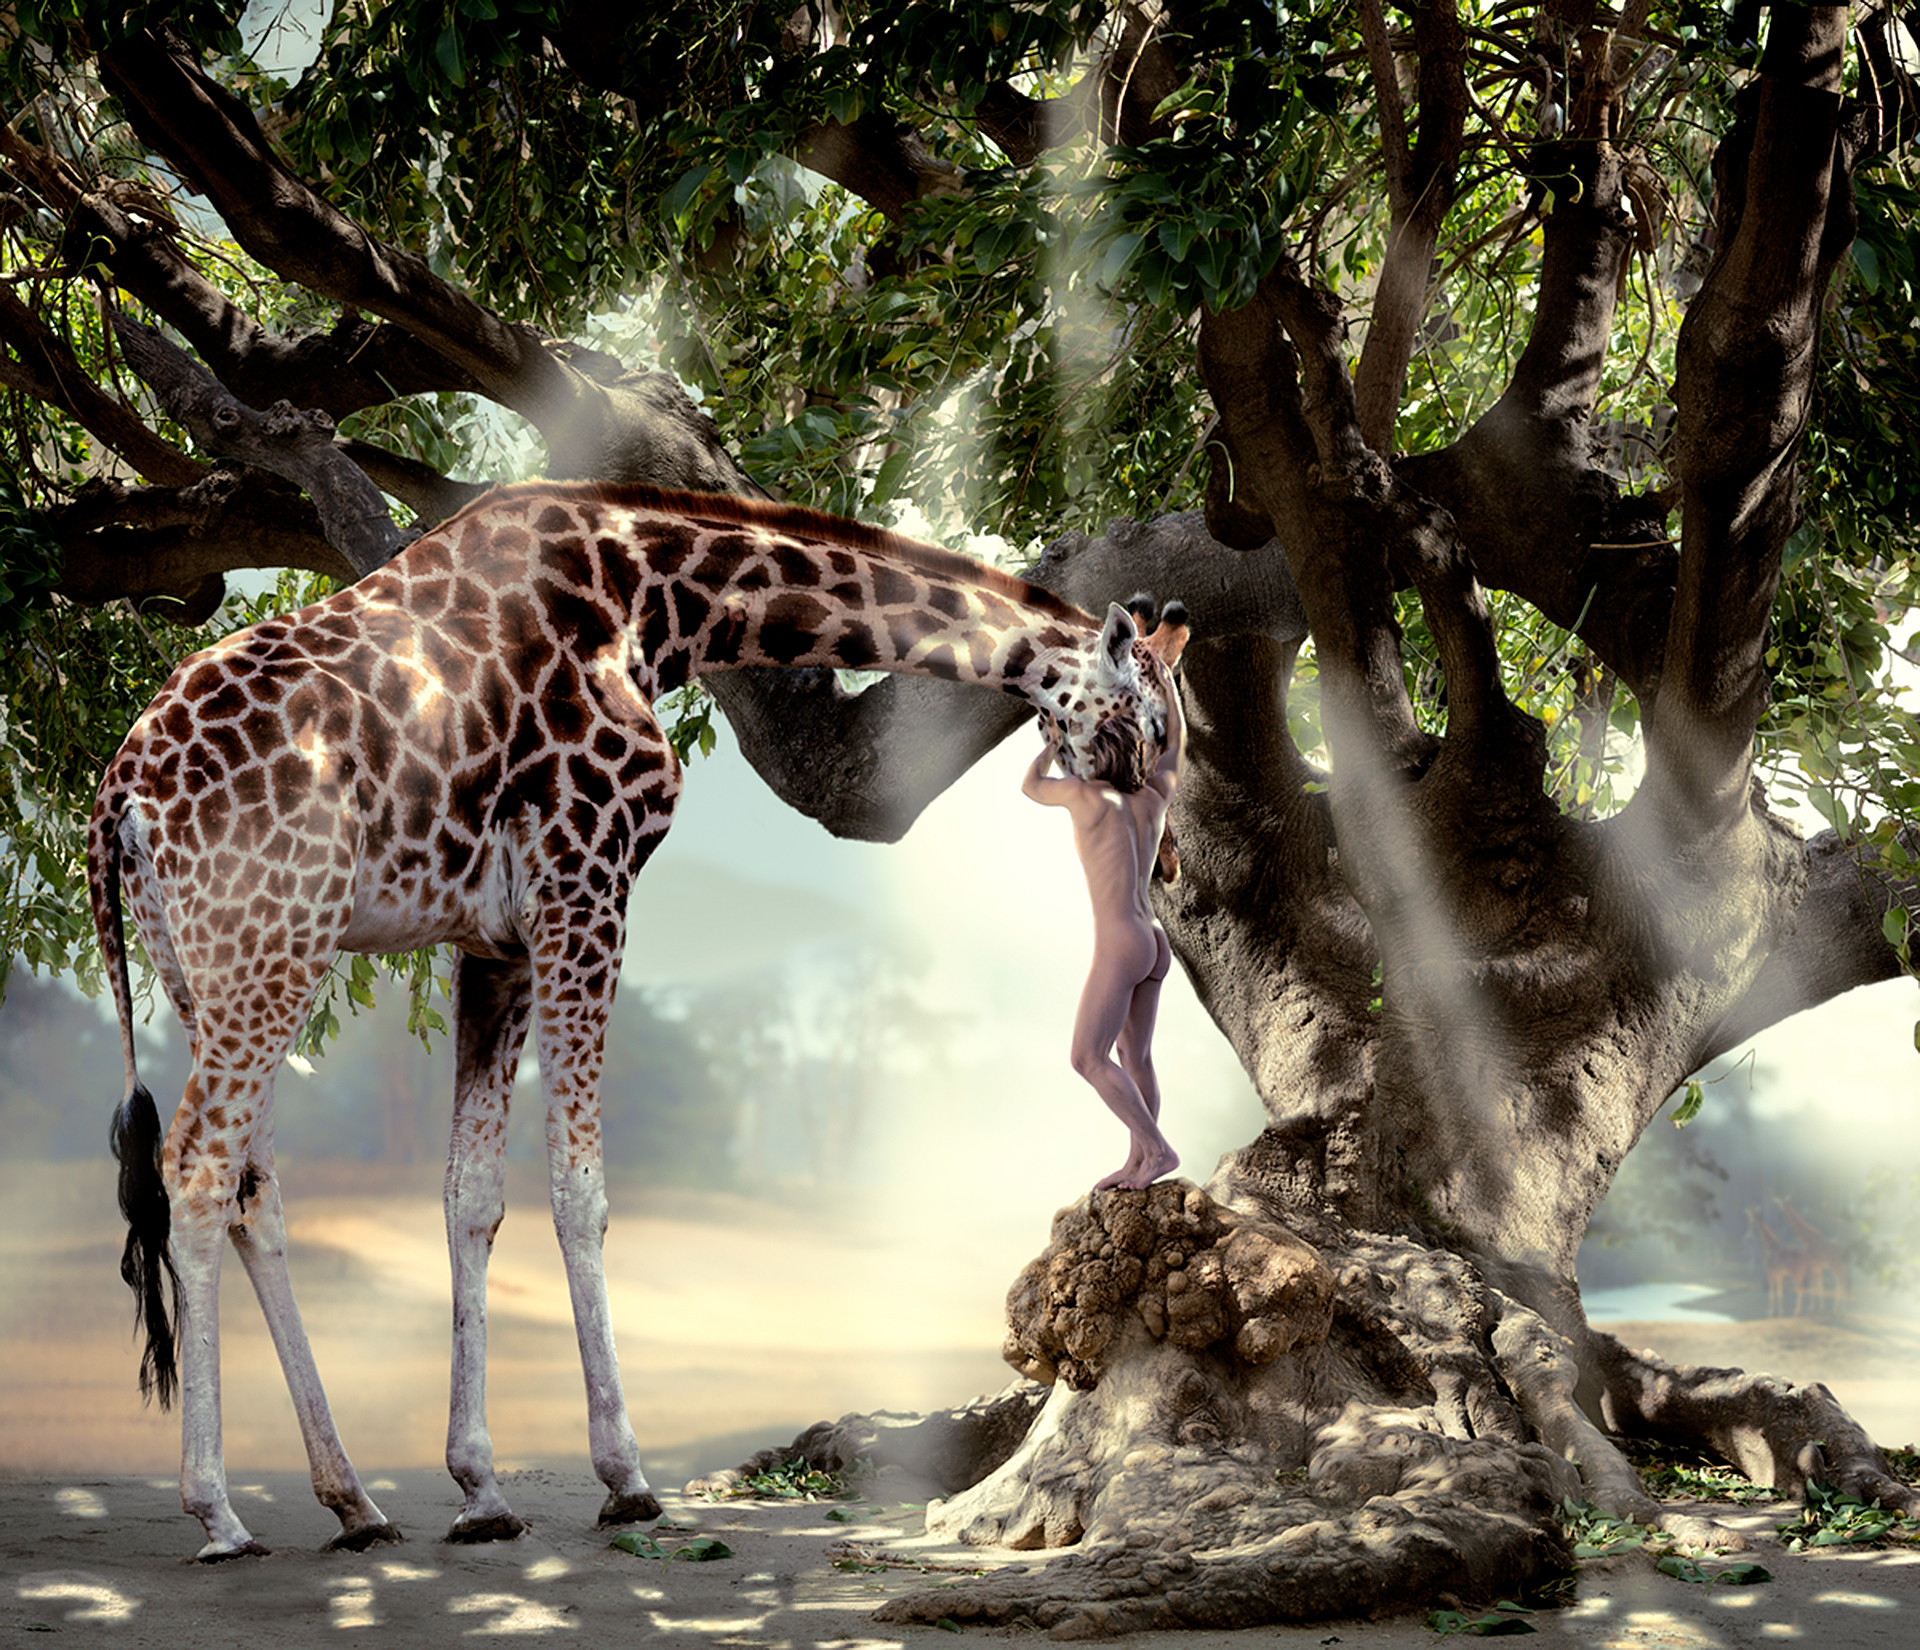 nude man hugging a giraffe, standing on an old tree